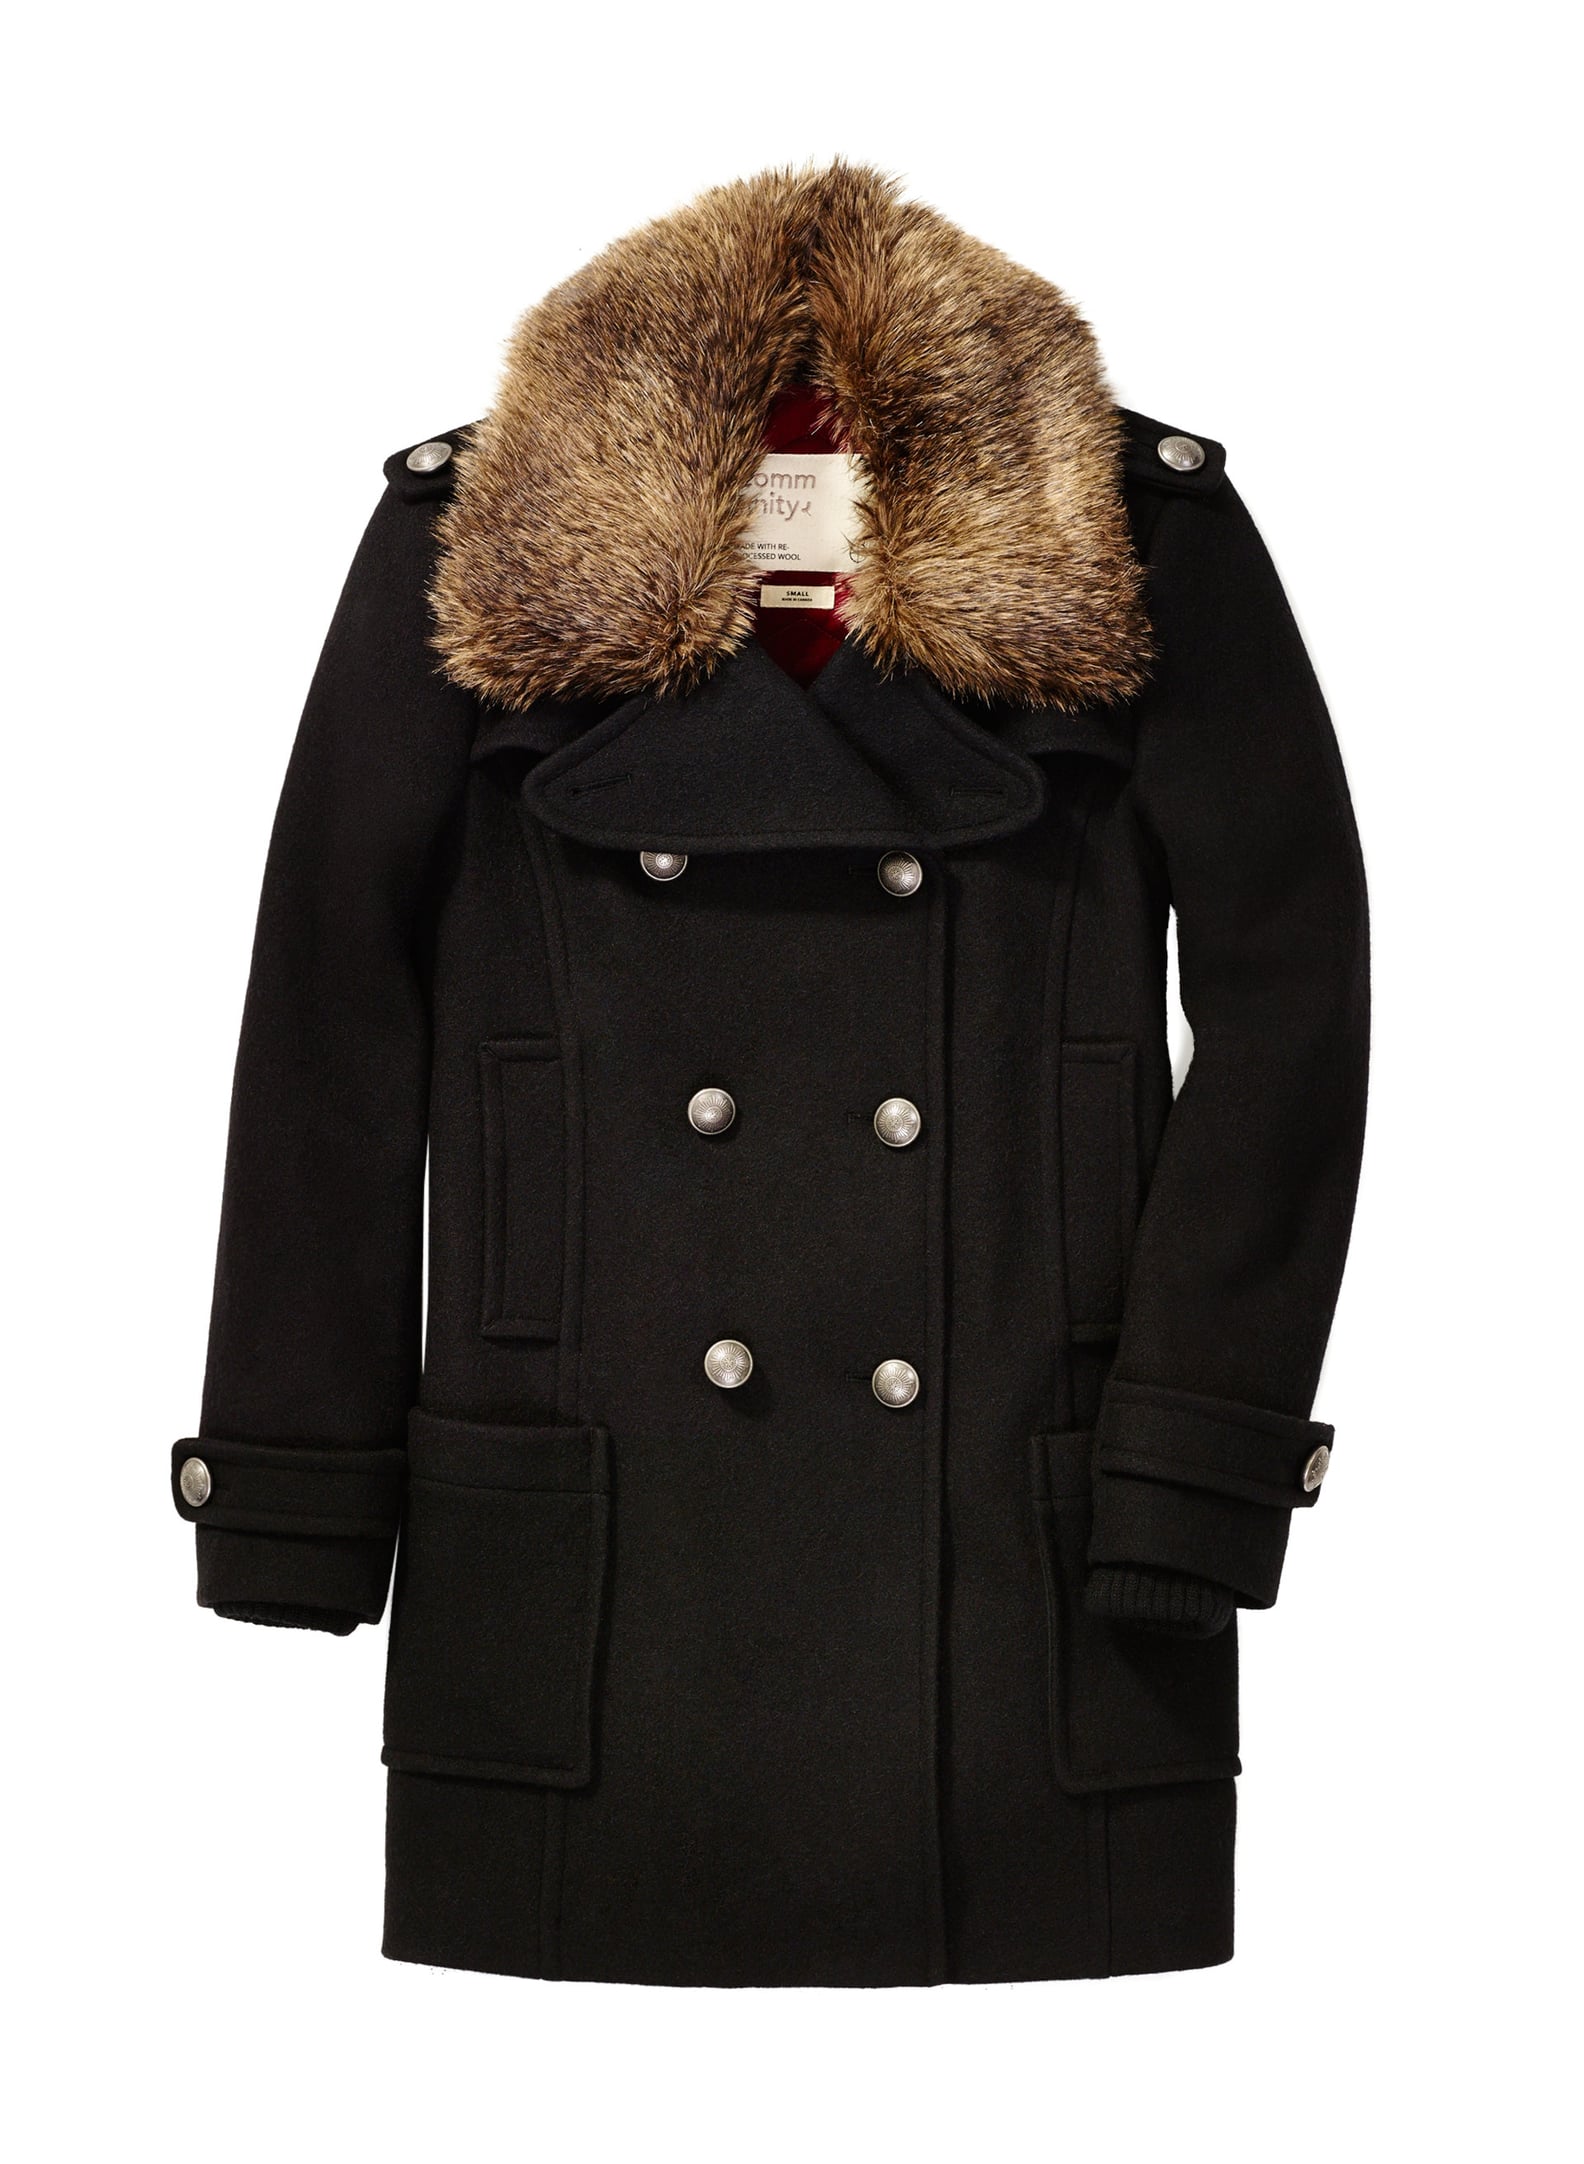 Coat Trends Fall 2013 | POPSUGAR Fashion